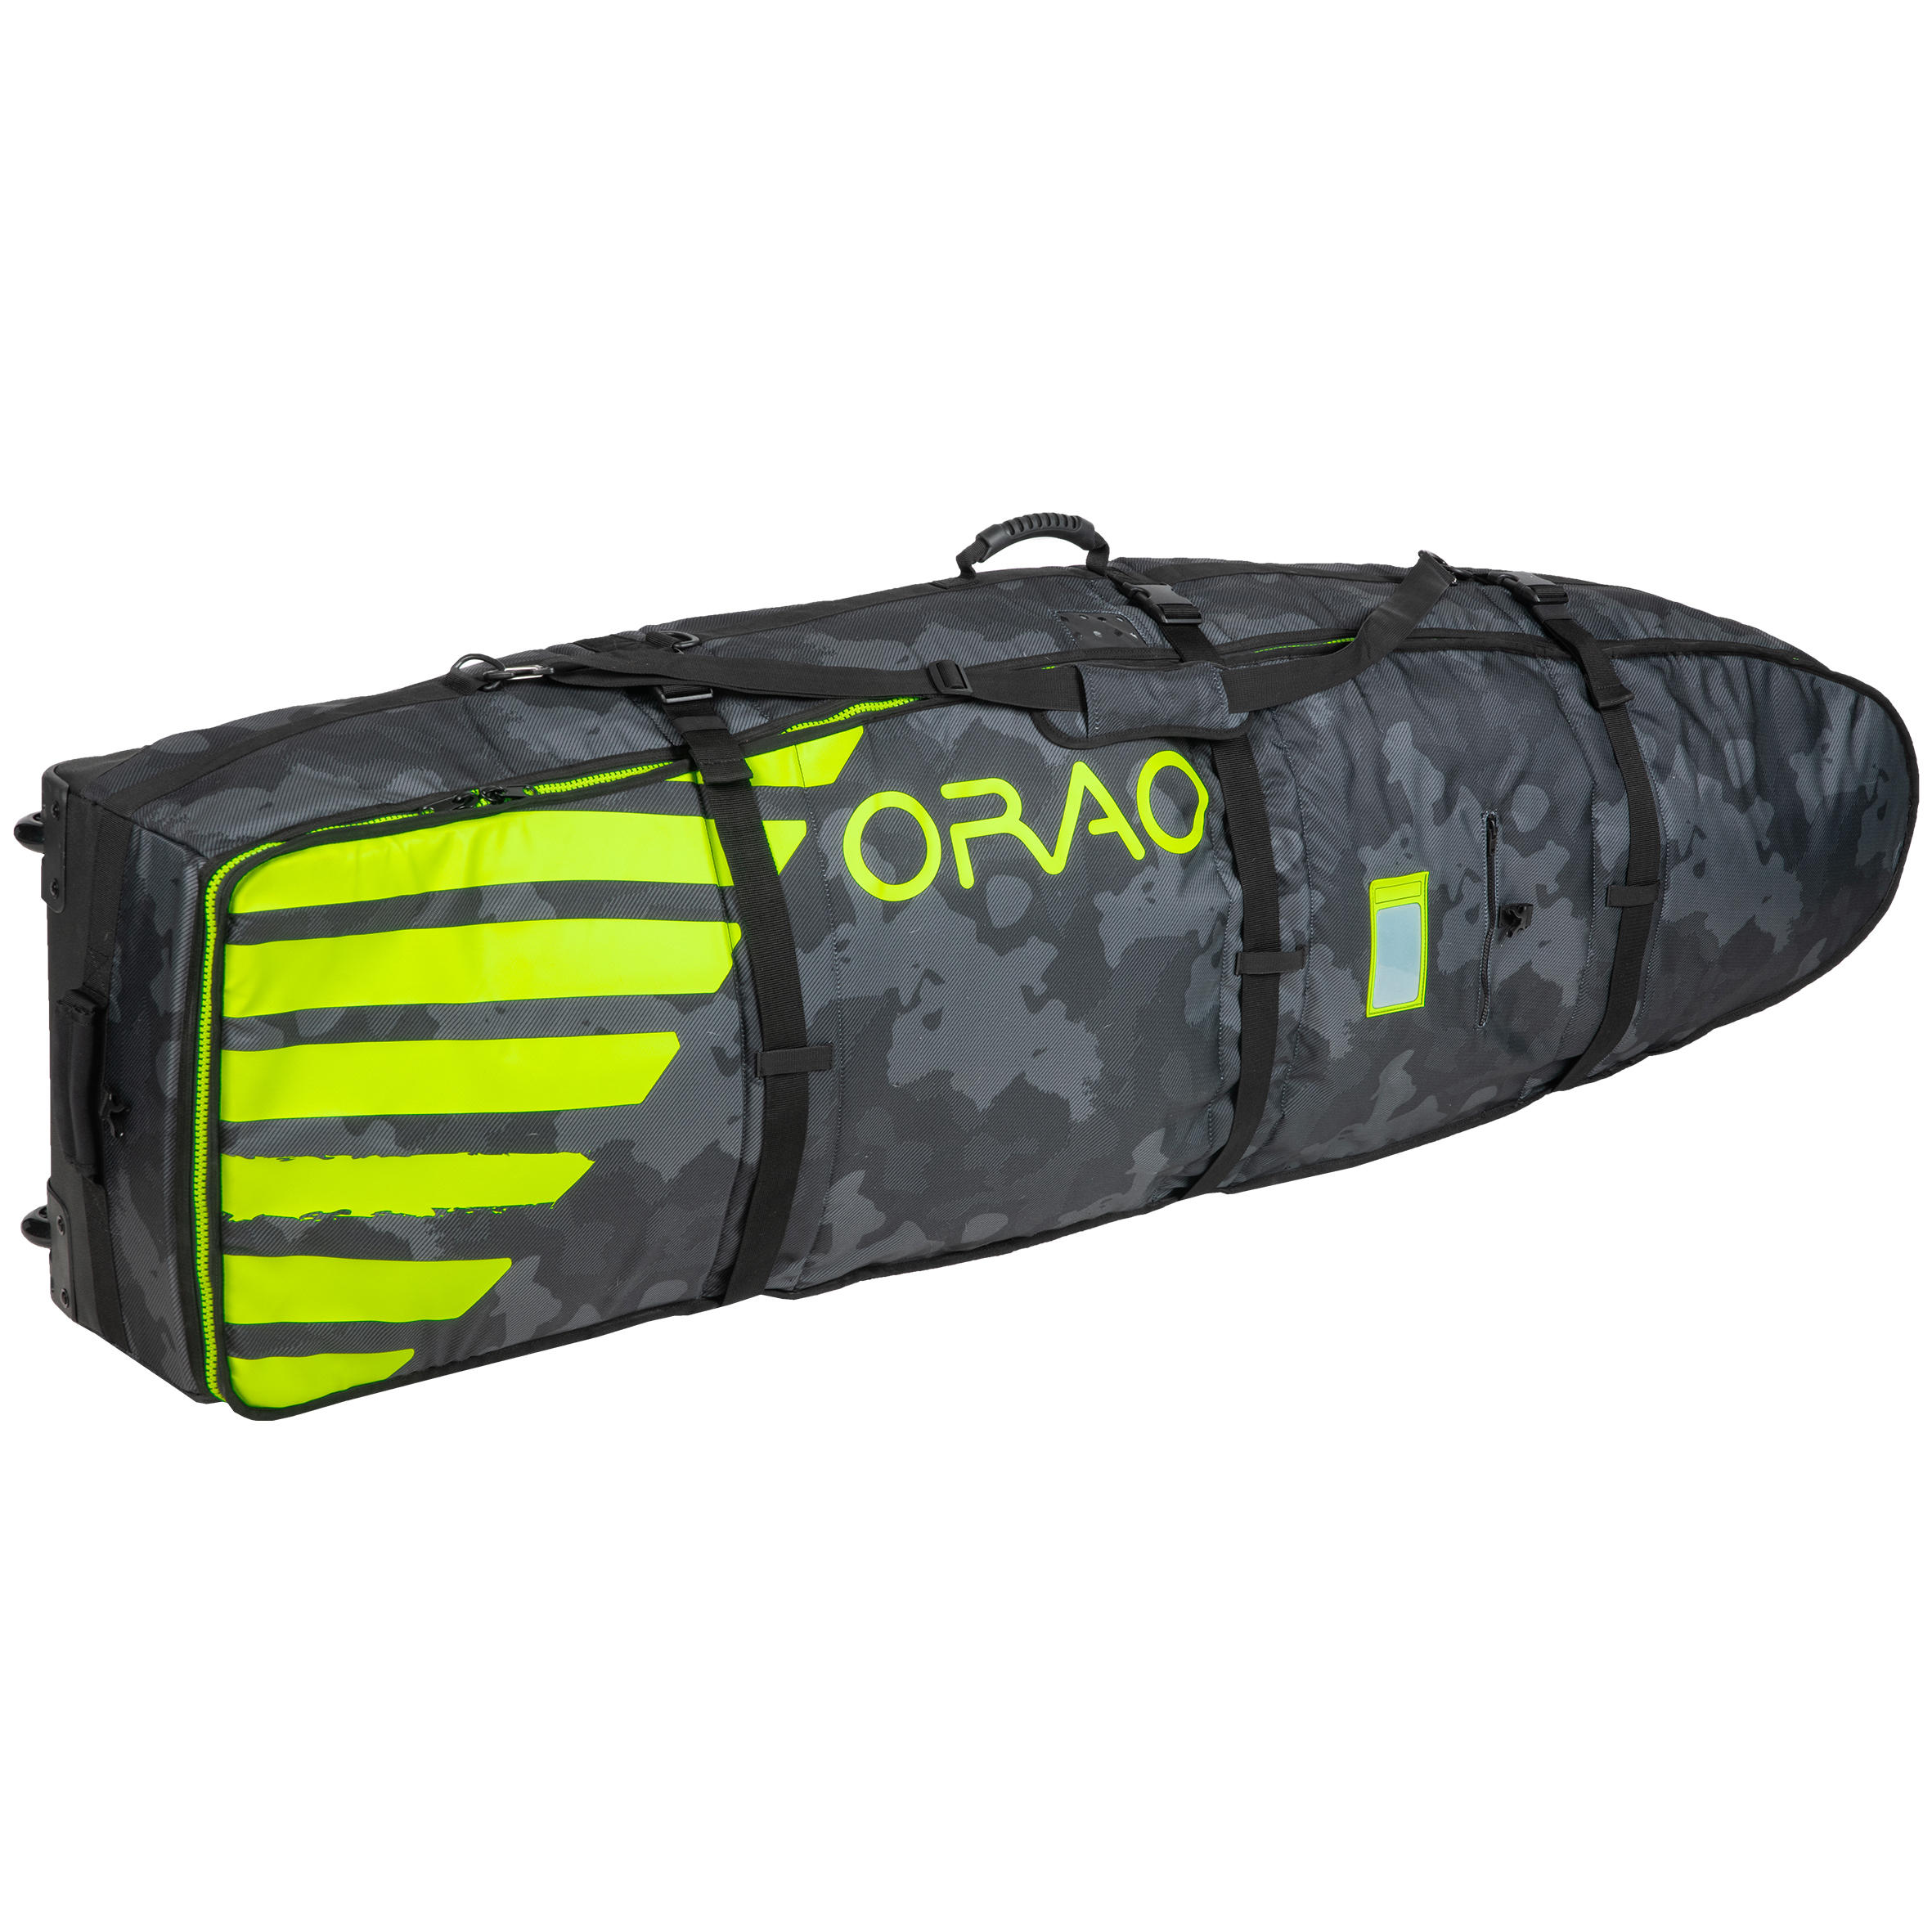 ORAO Boardbag Kite anpassbar bis 180 cm